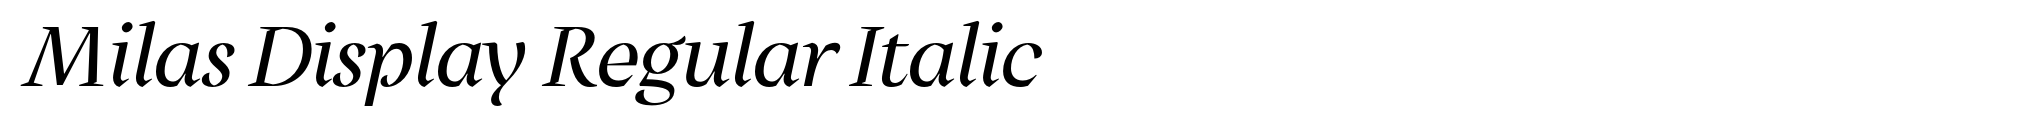 Milas Display Regular Italic image